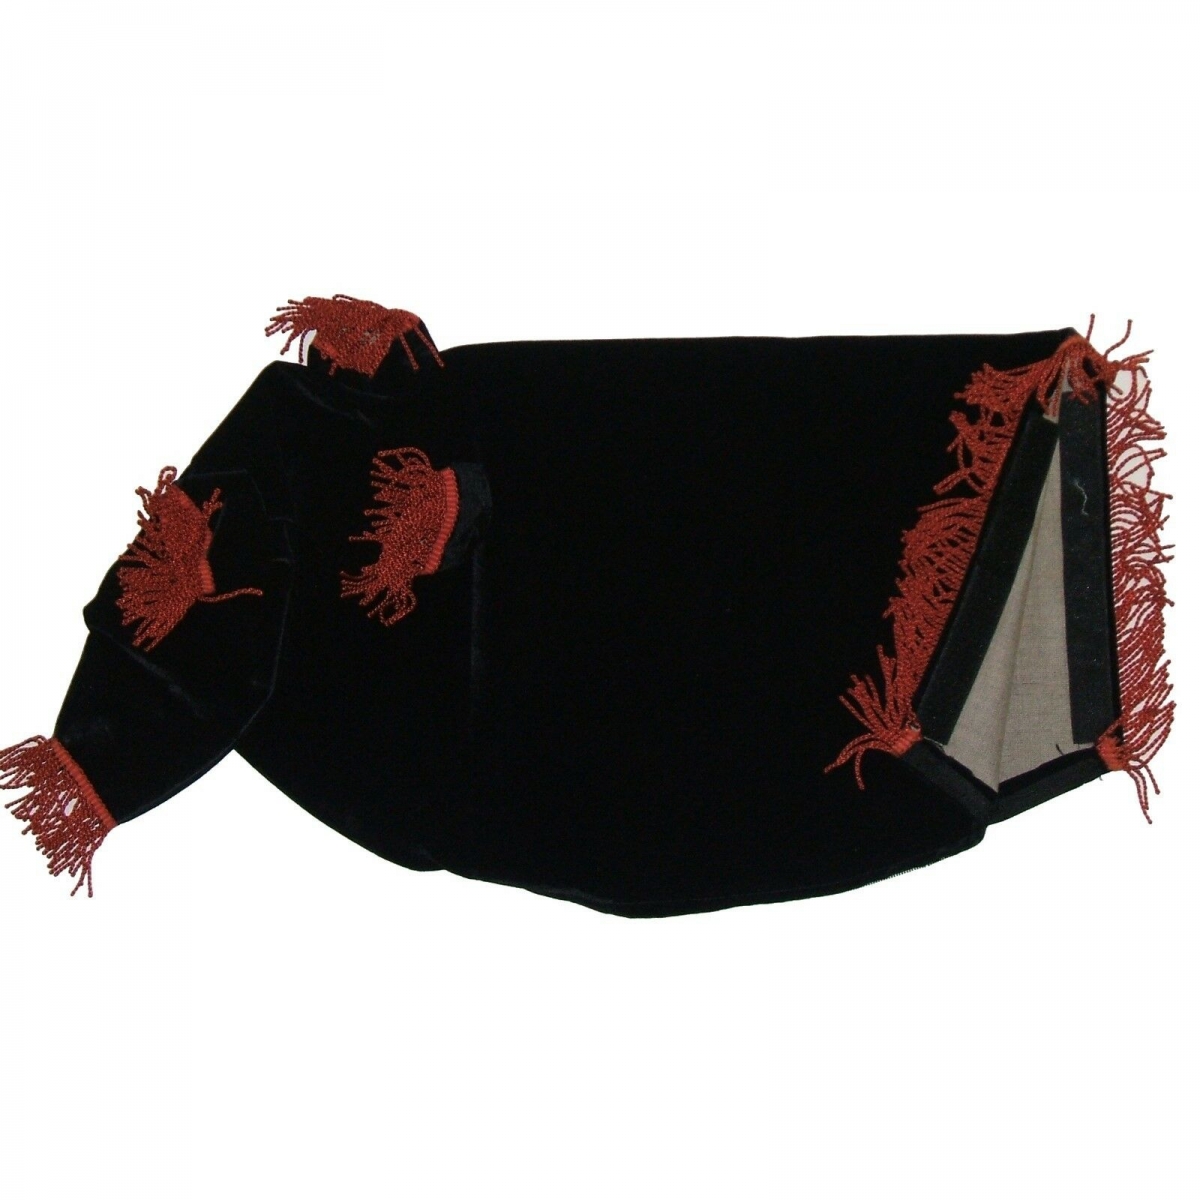 Pipe Bag Covers velvet with silky fringe Black with Red Fringe